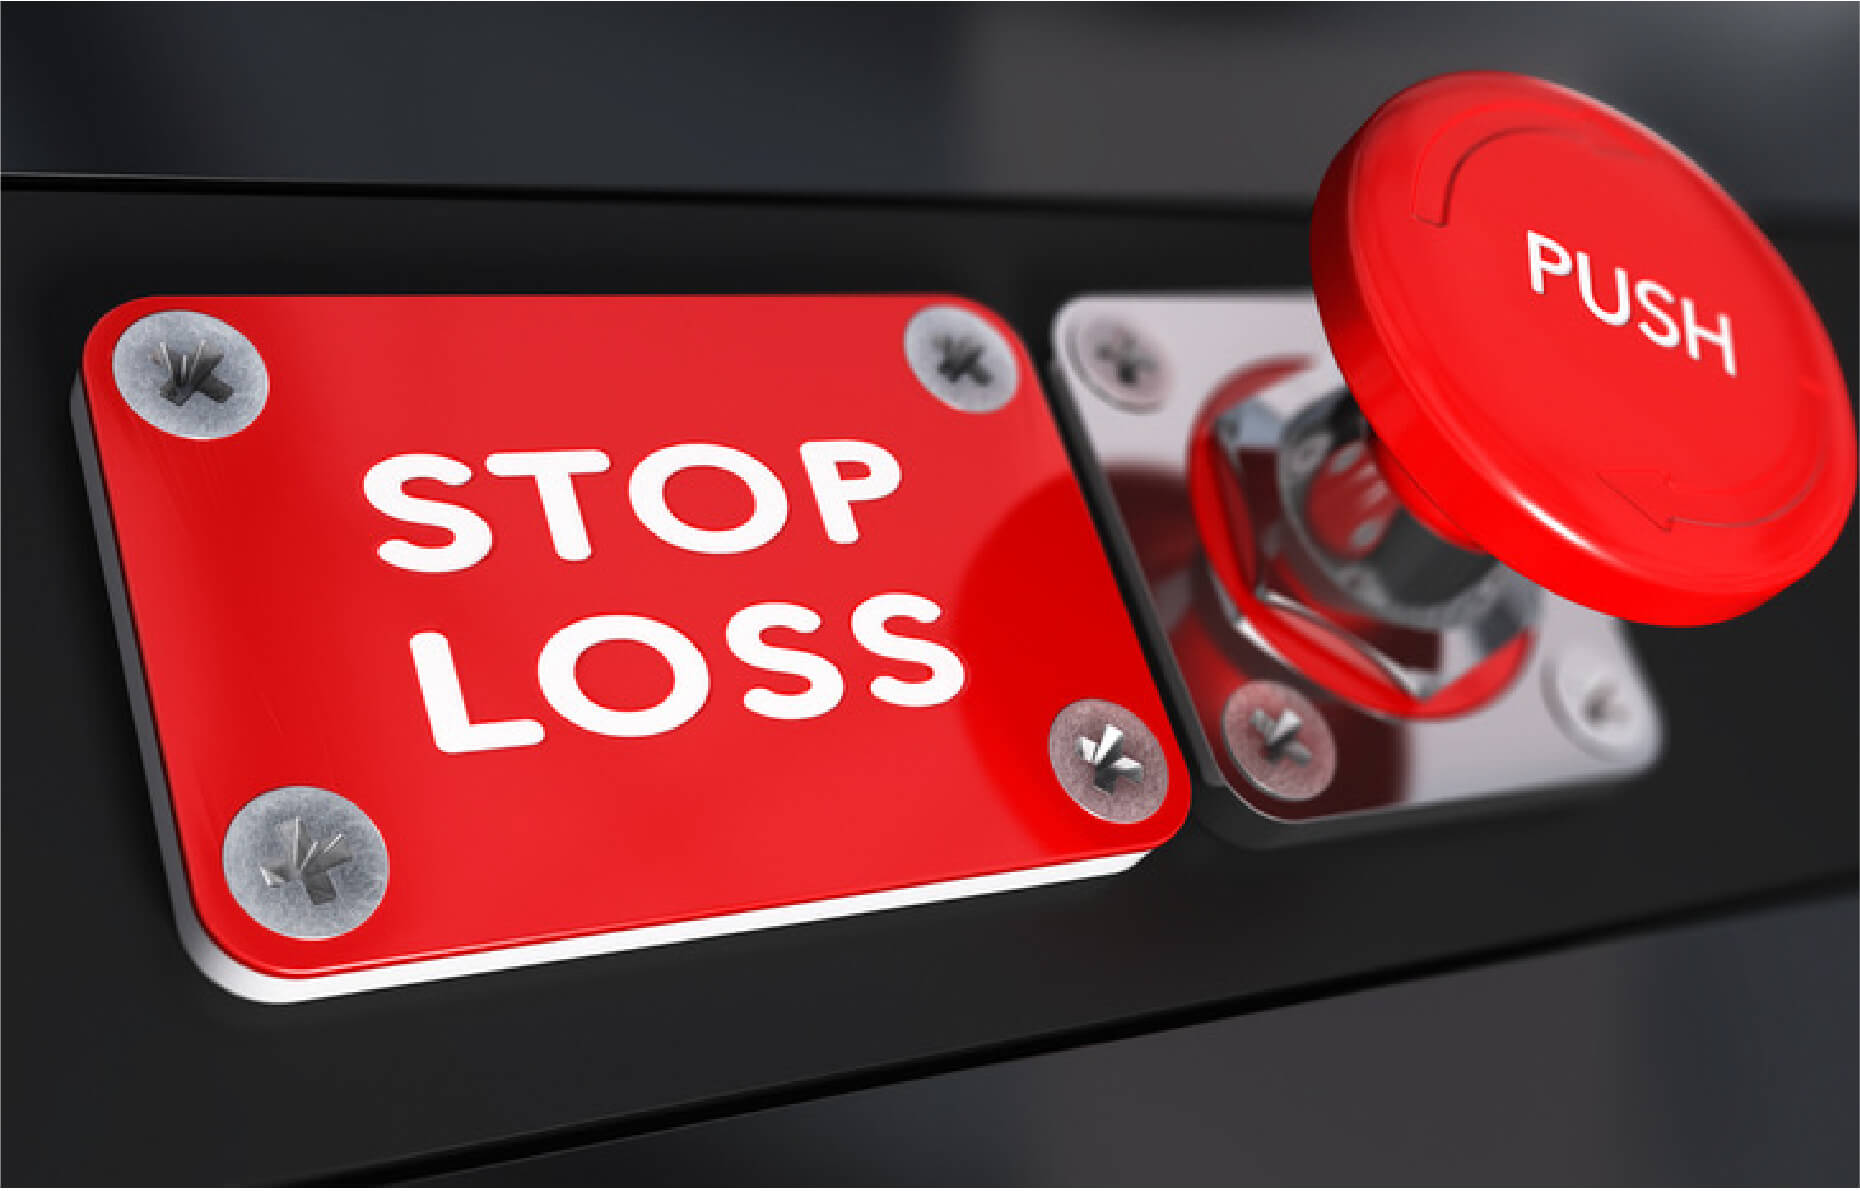 stop-loss-fail-safe-image